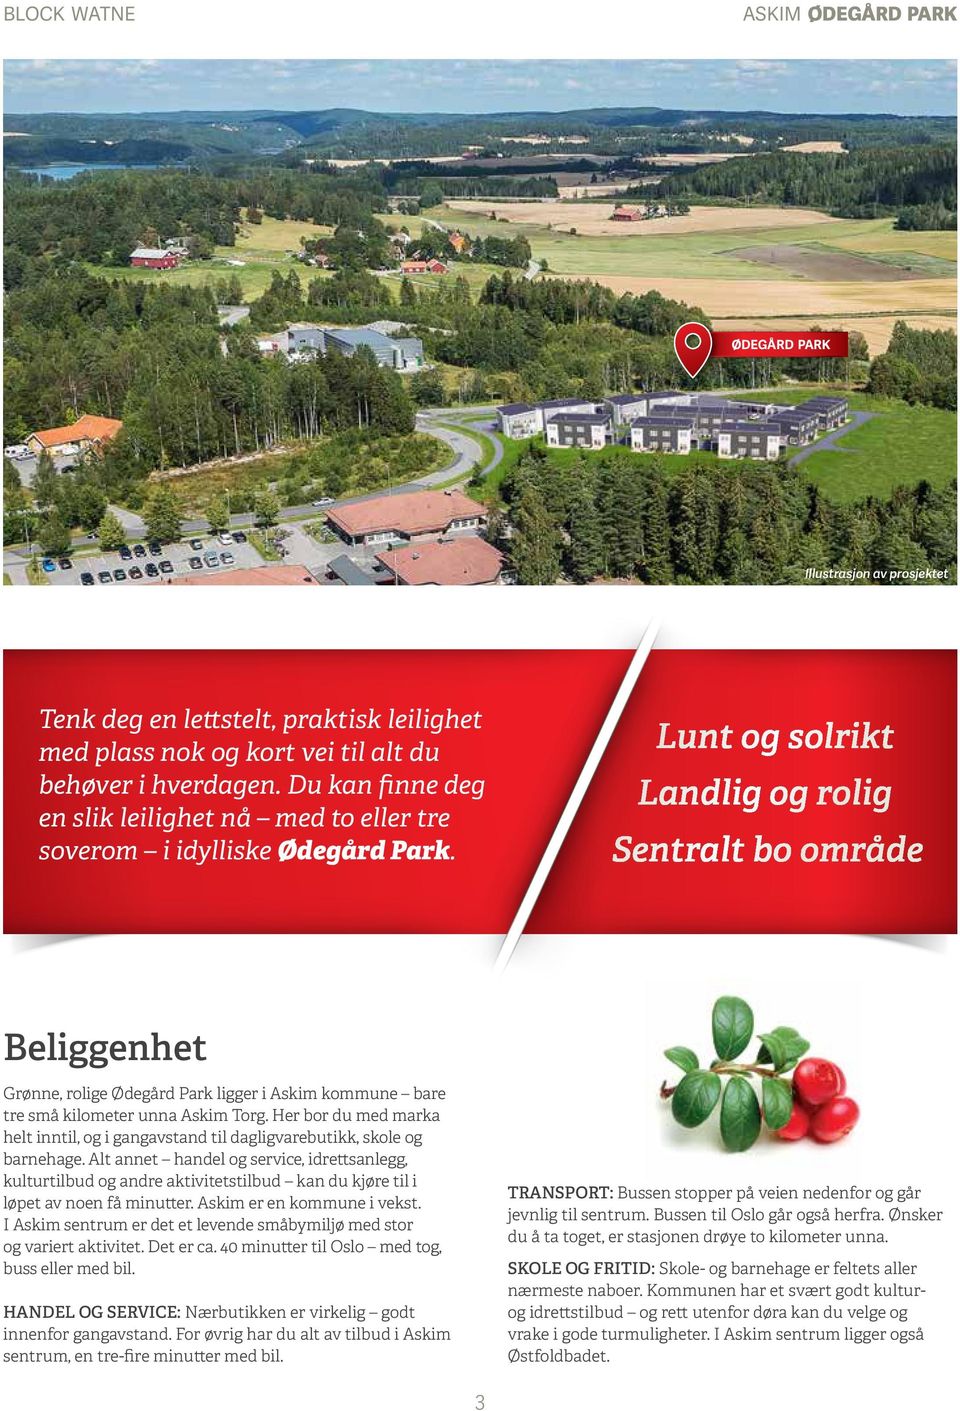 Lunt og solrikt Landlig og rolig Sentralt bo område Beliggenhet Grønne, rolige Ødegård Park ligger i Askim kommune bare tre små kilometer unna Askim Torg.